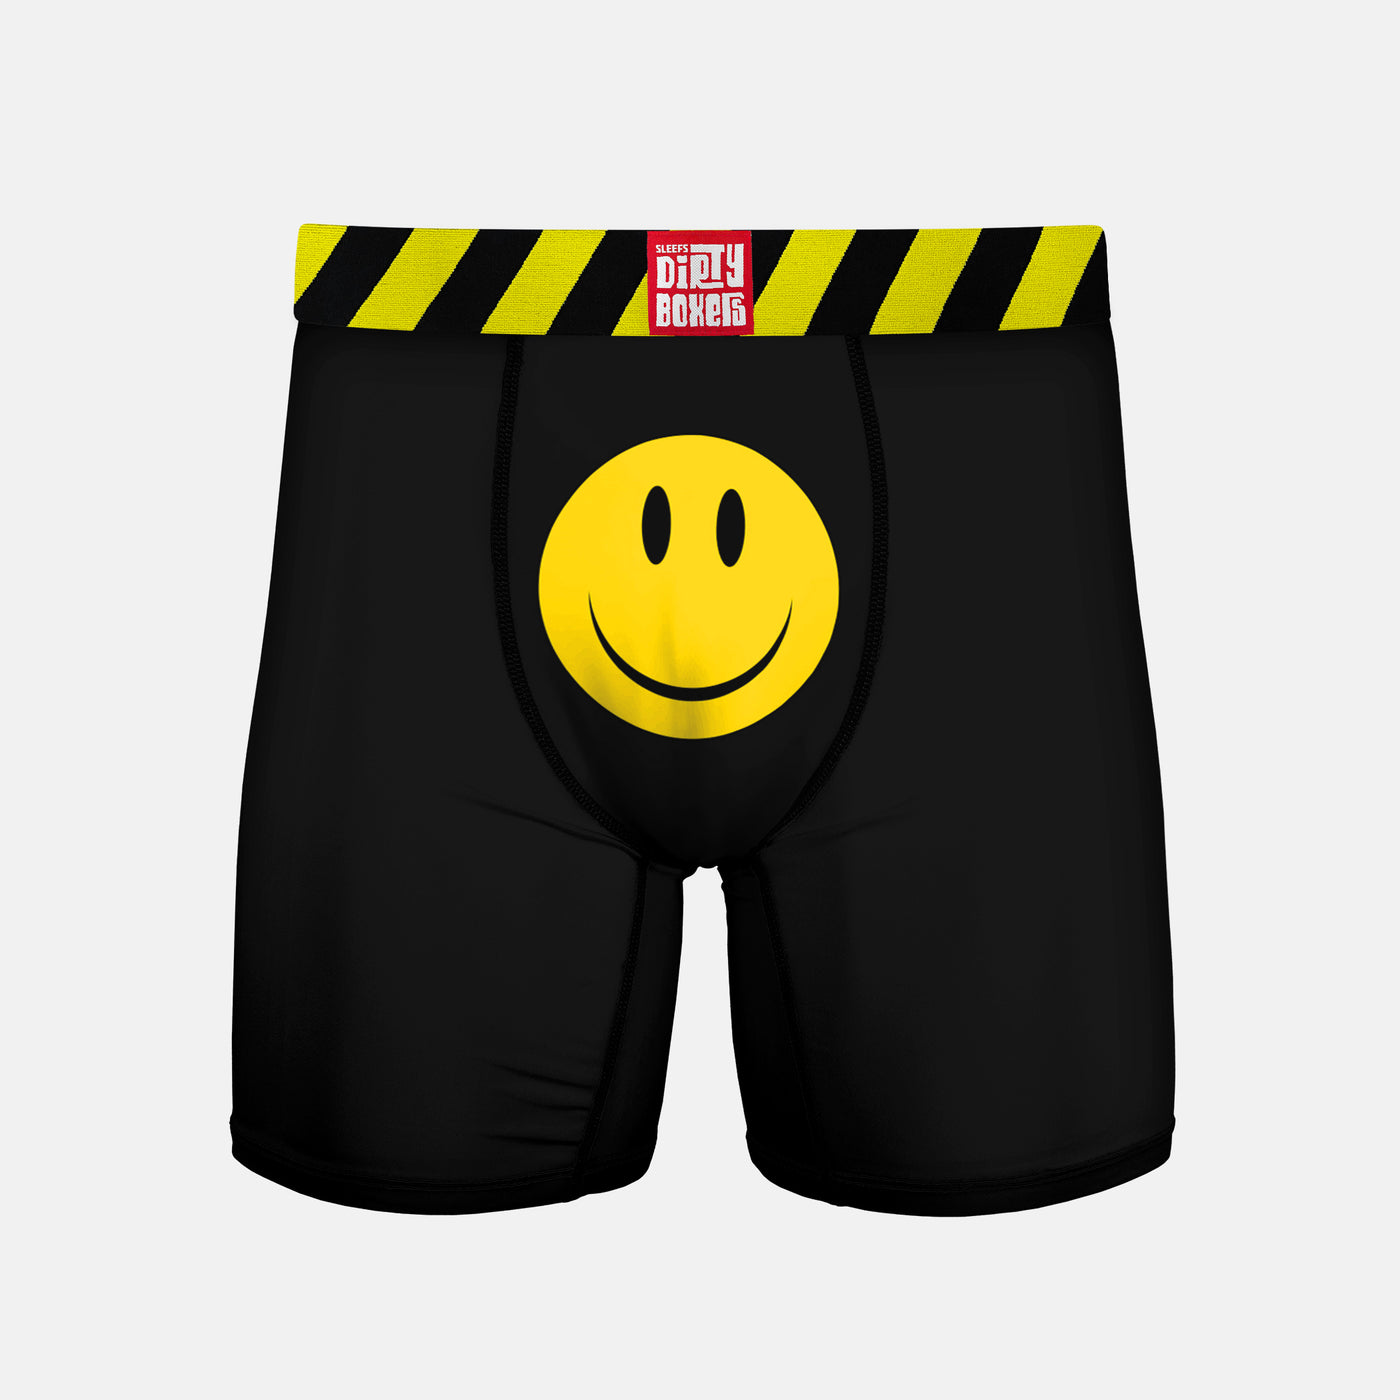 Smiley Face Dirty Boxers Men's Underwear